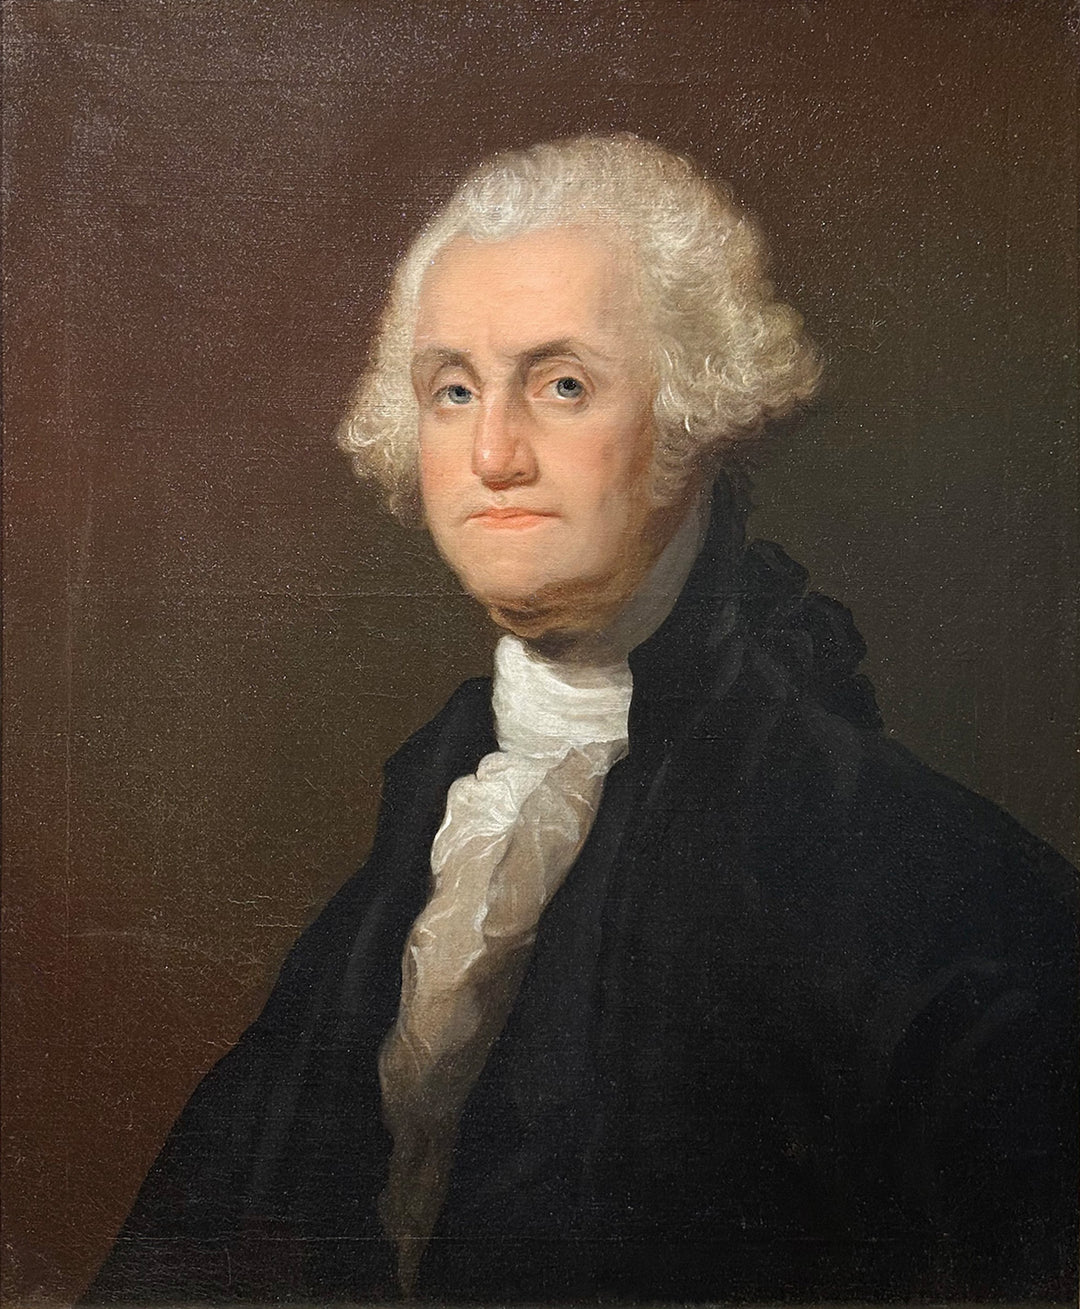 George Washington by American Nineteenth Century Painter